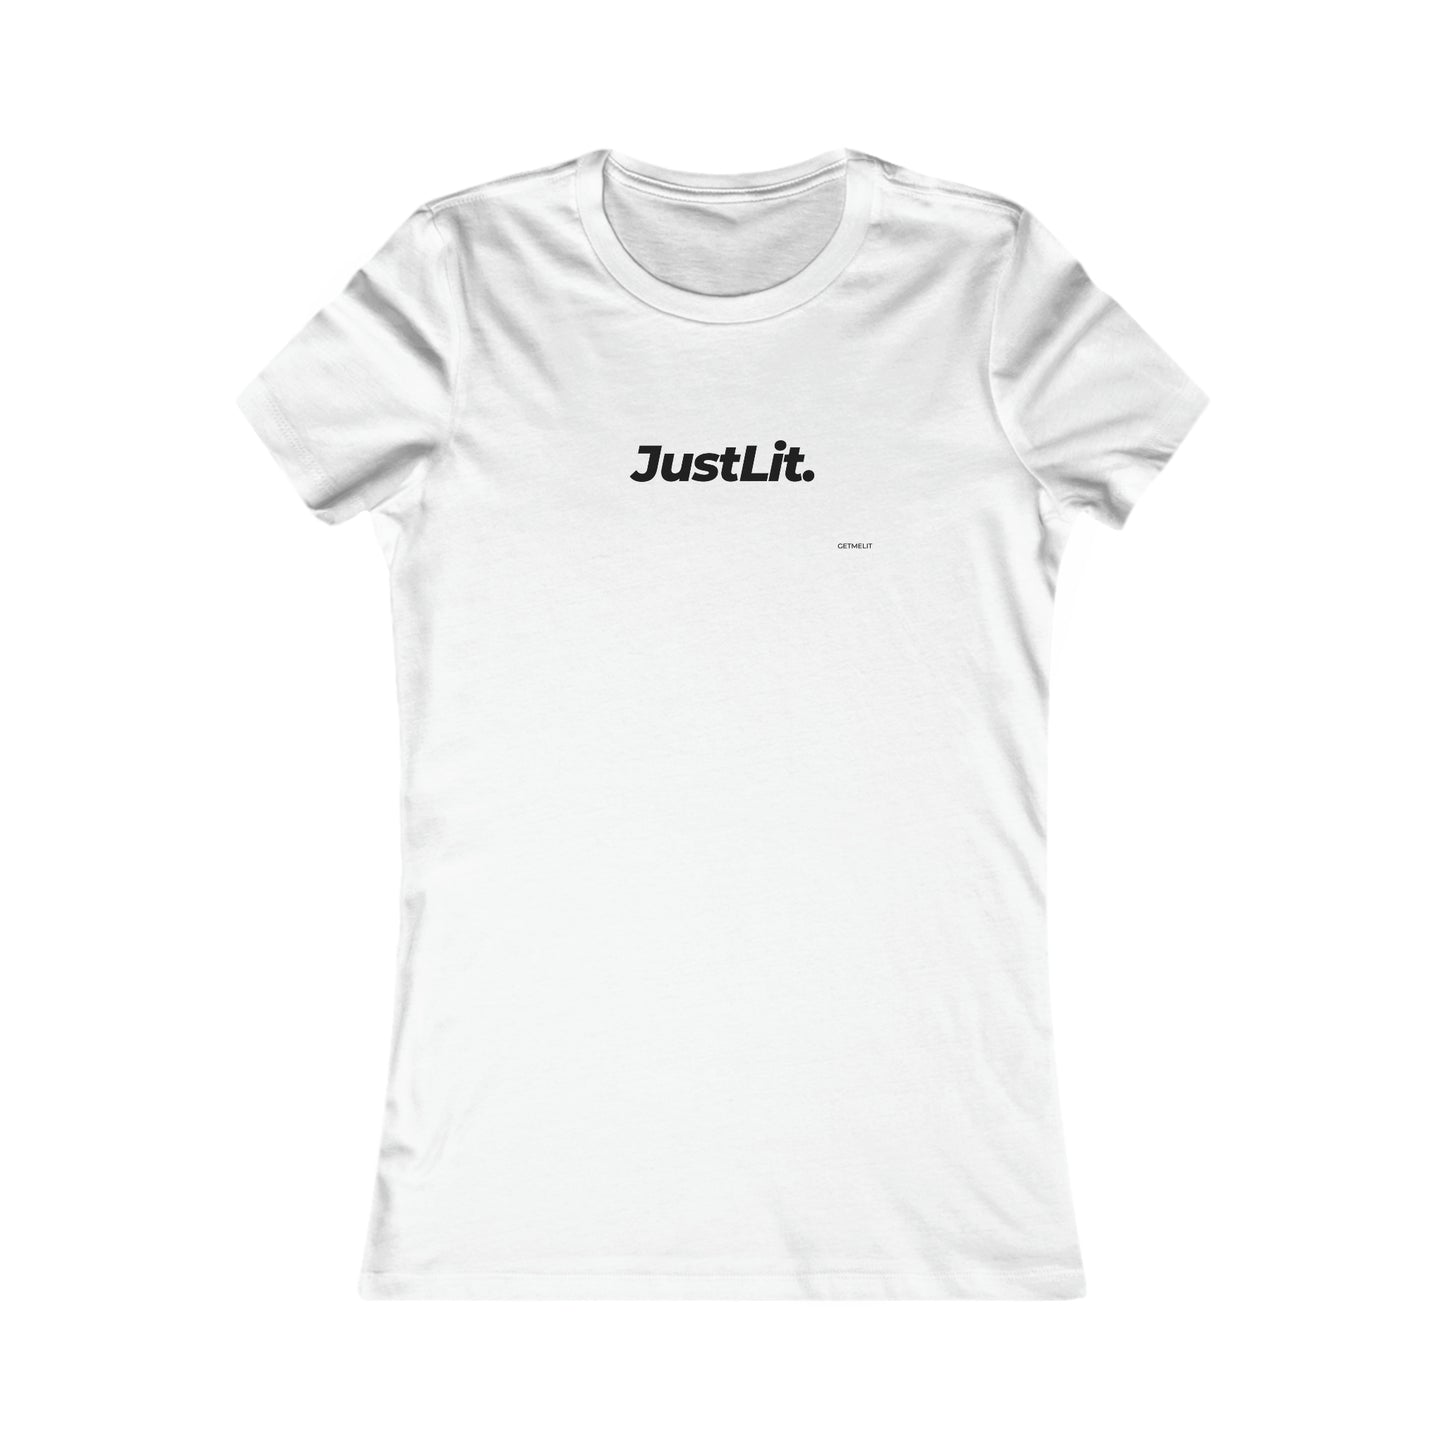 JustLit Women's TShirt